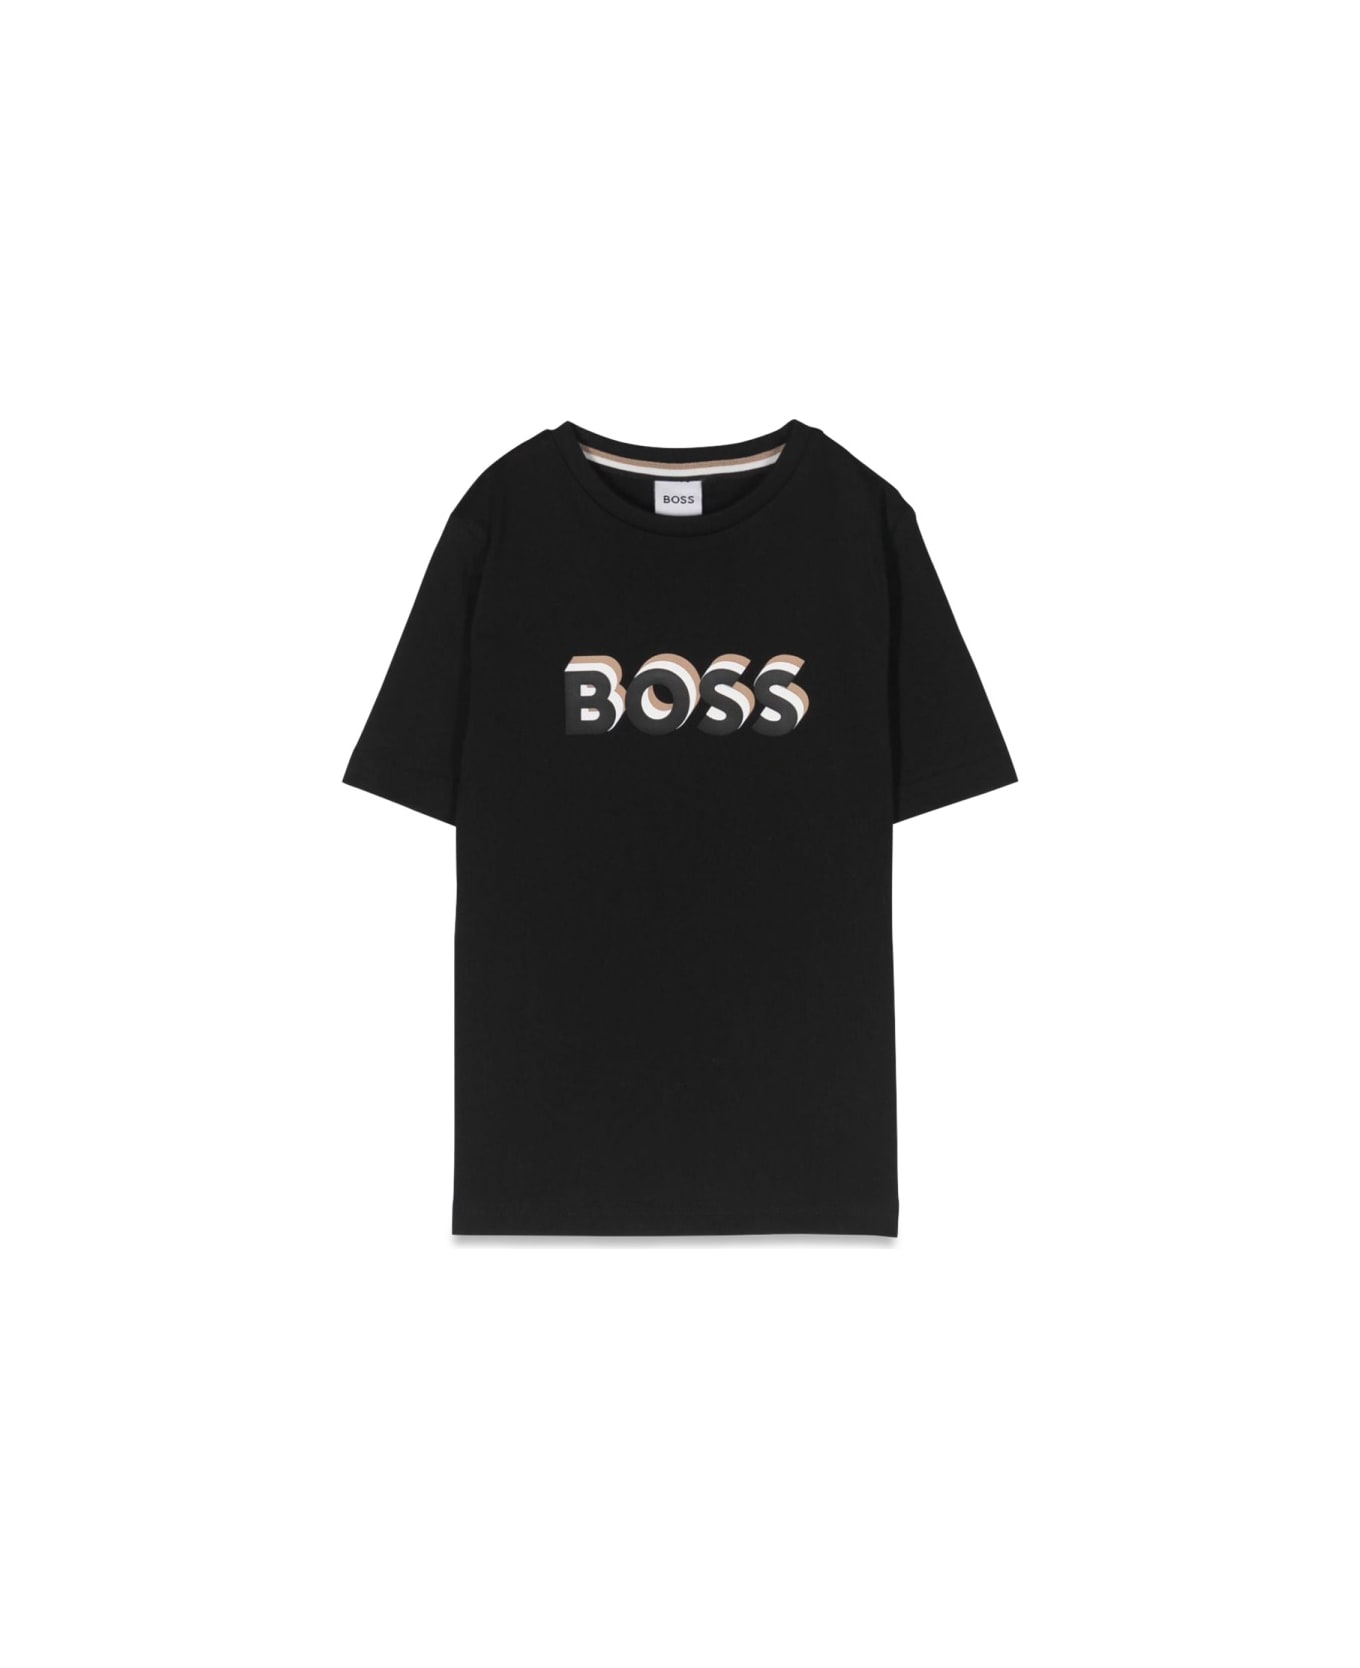 Hugo Boss Tee Shirt - BLACK